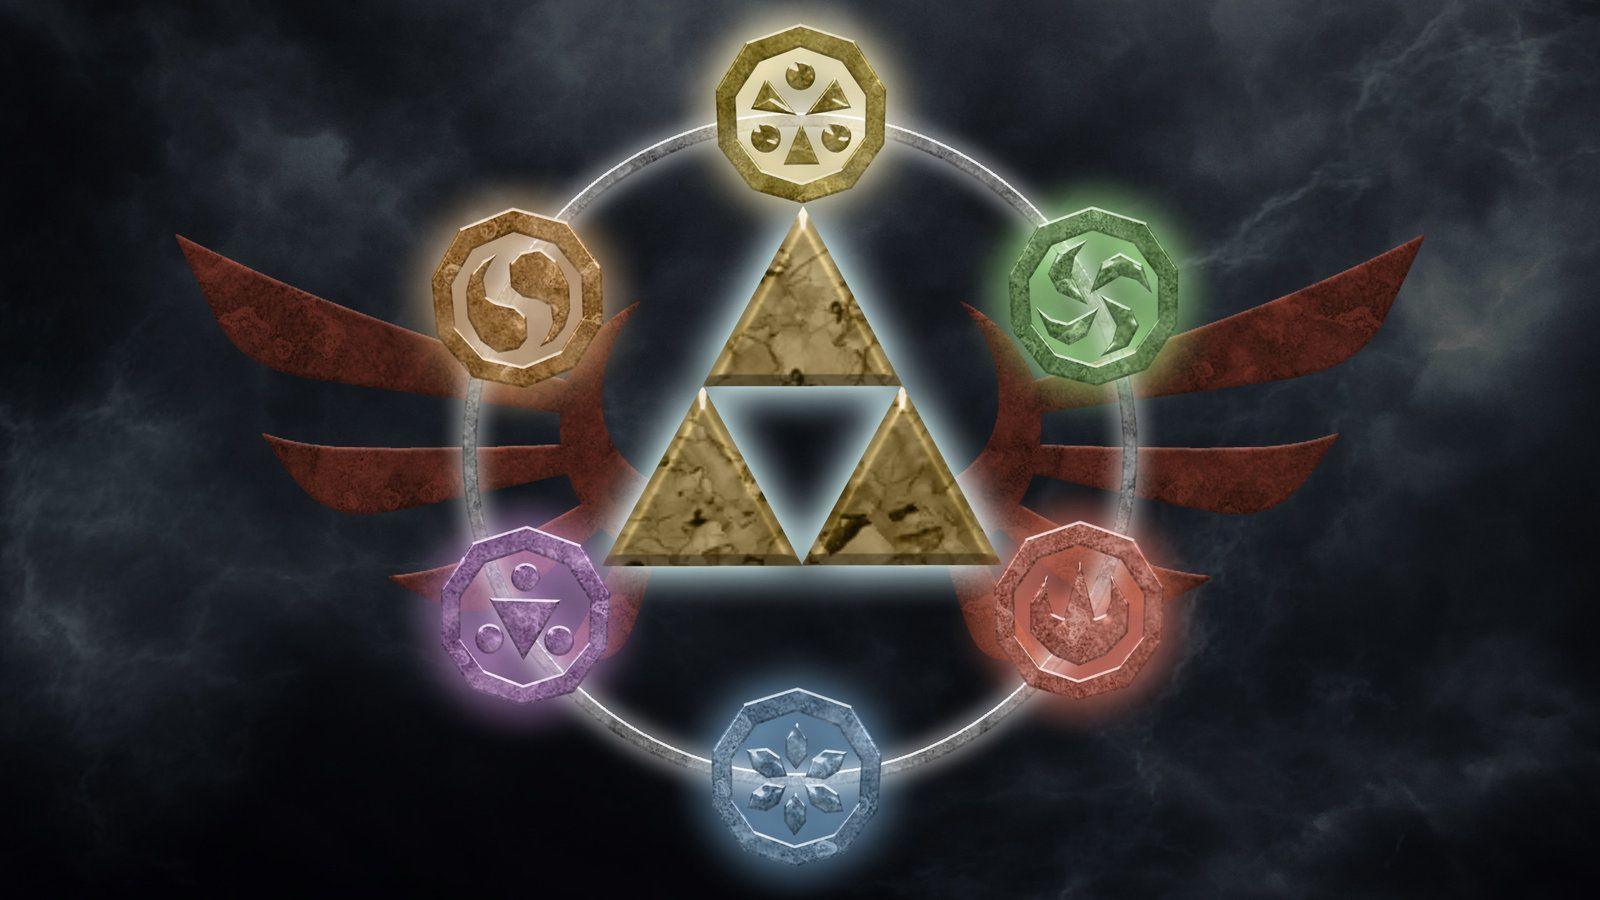 Zelda Backgrounds Triforce, wallpaper, Zelda Backgrounds Triforce